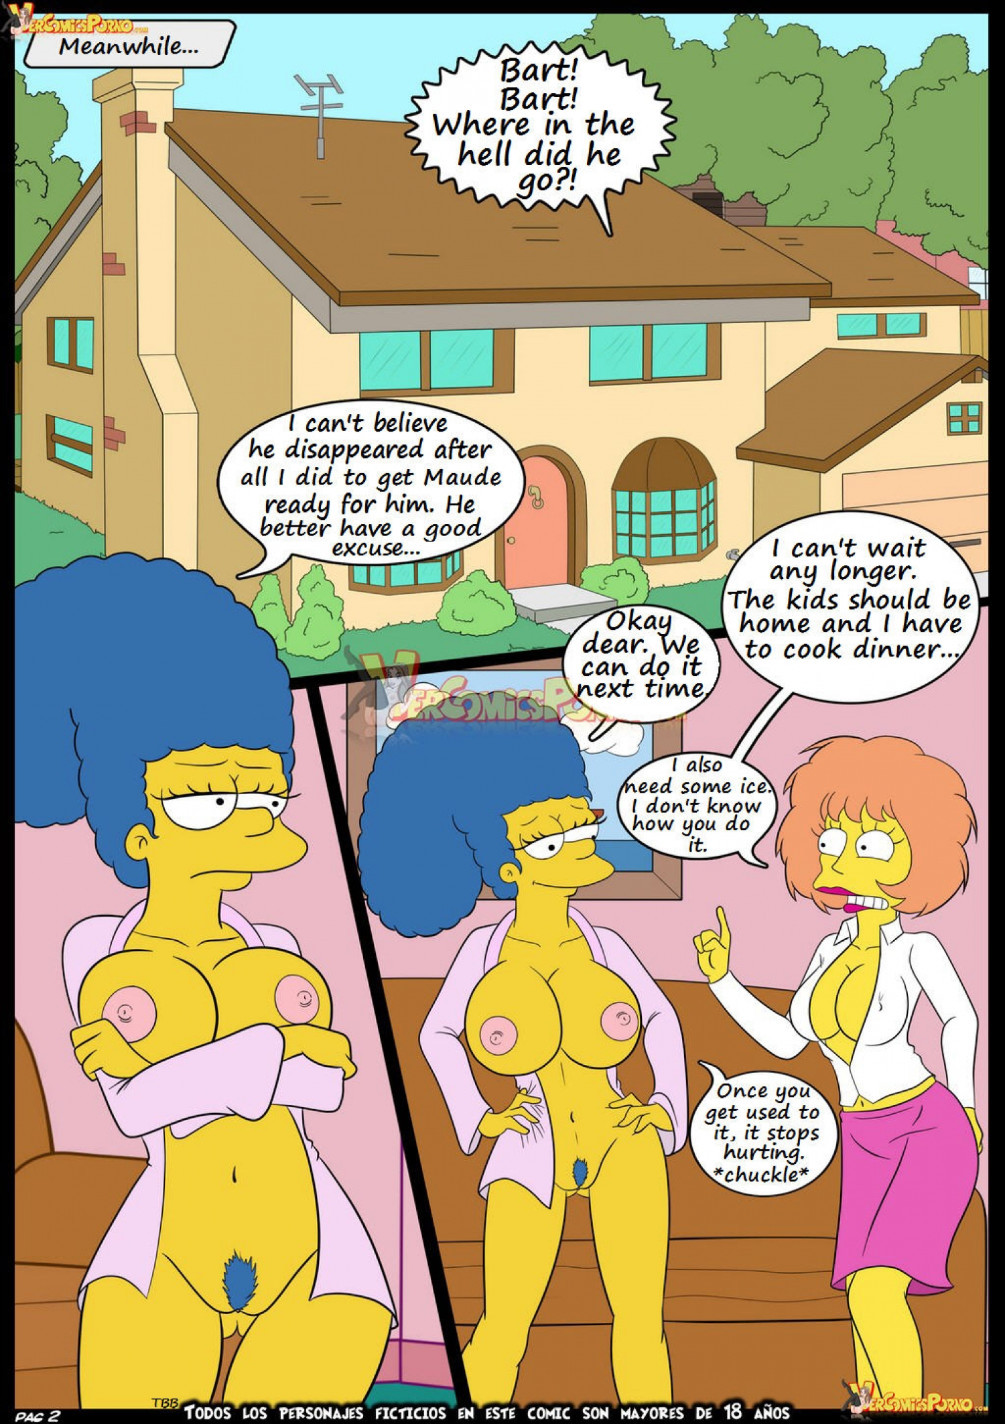 Friends Mom Porn Comics - Old Habits 6 â€“ The Simpsons Porn Parody Comics by Croc -Sex ...